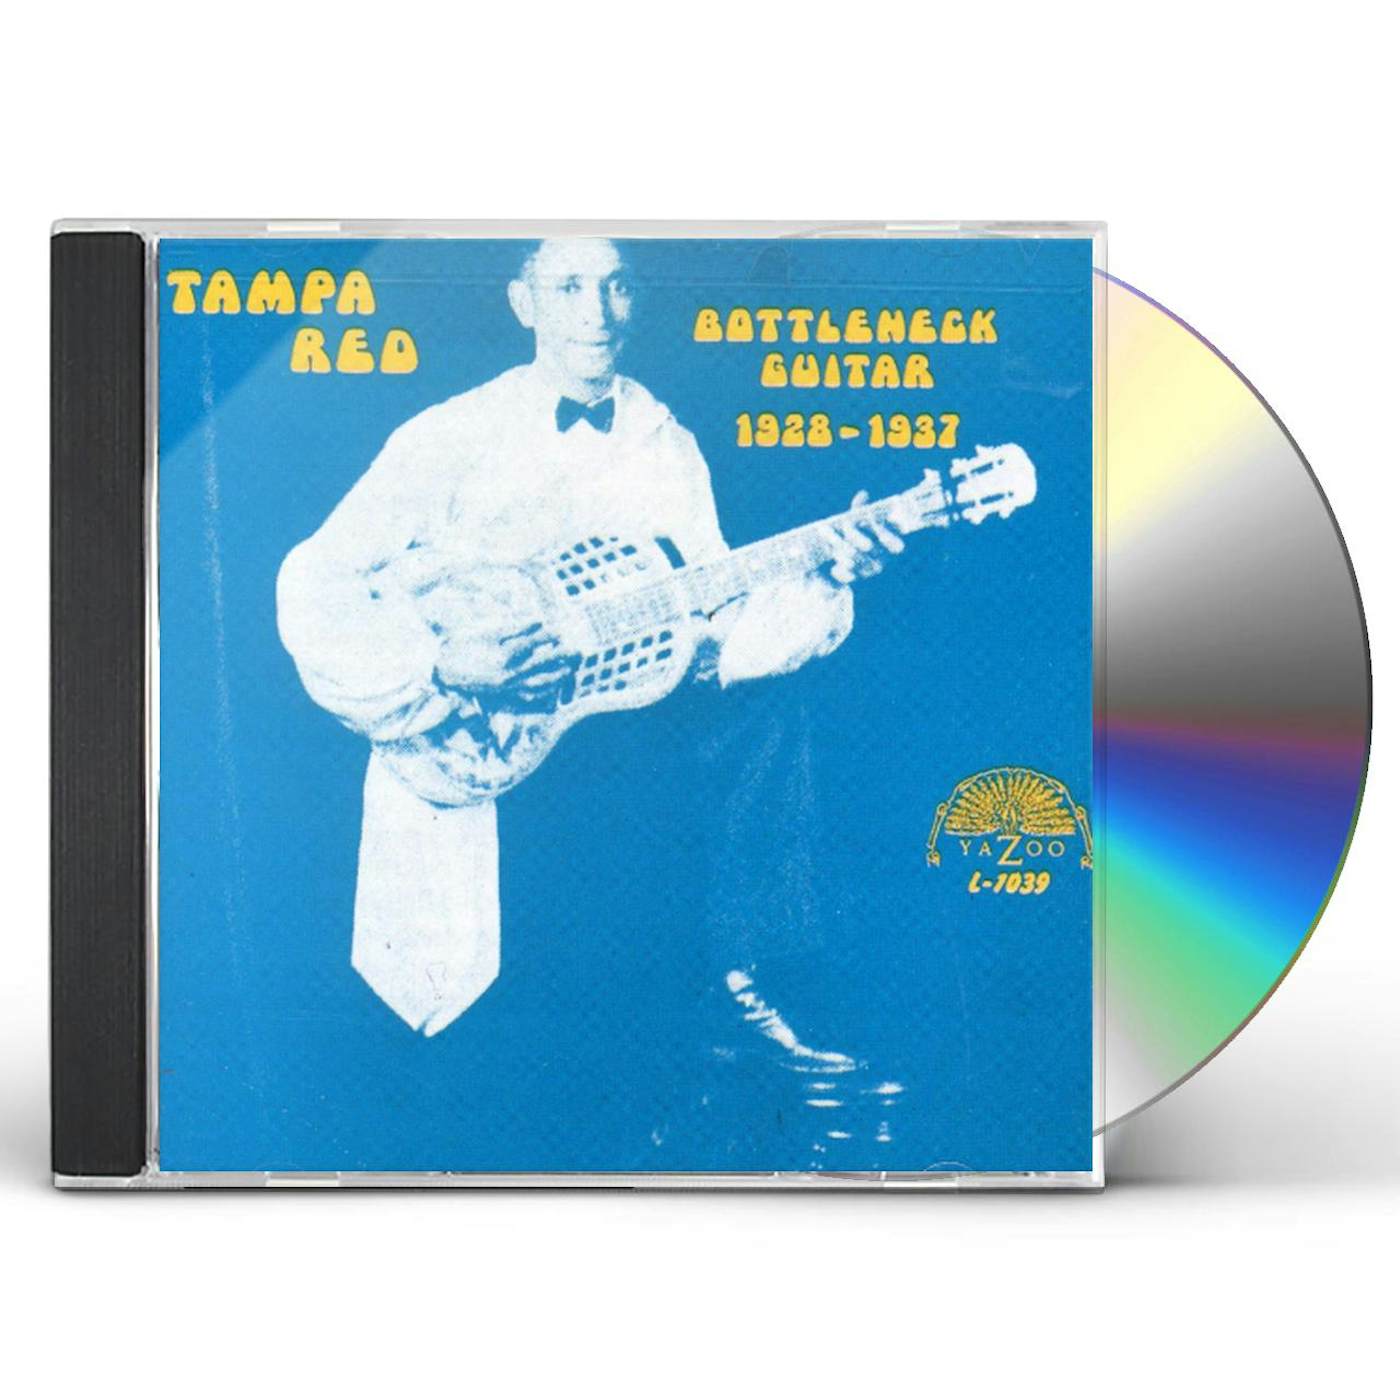 Tampa Red BOTTLENECK GUITAR 1928-1937 CD